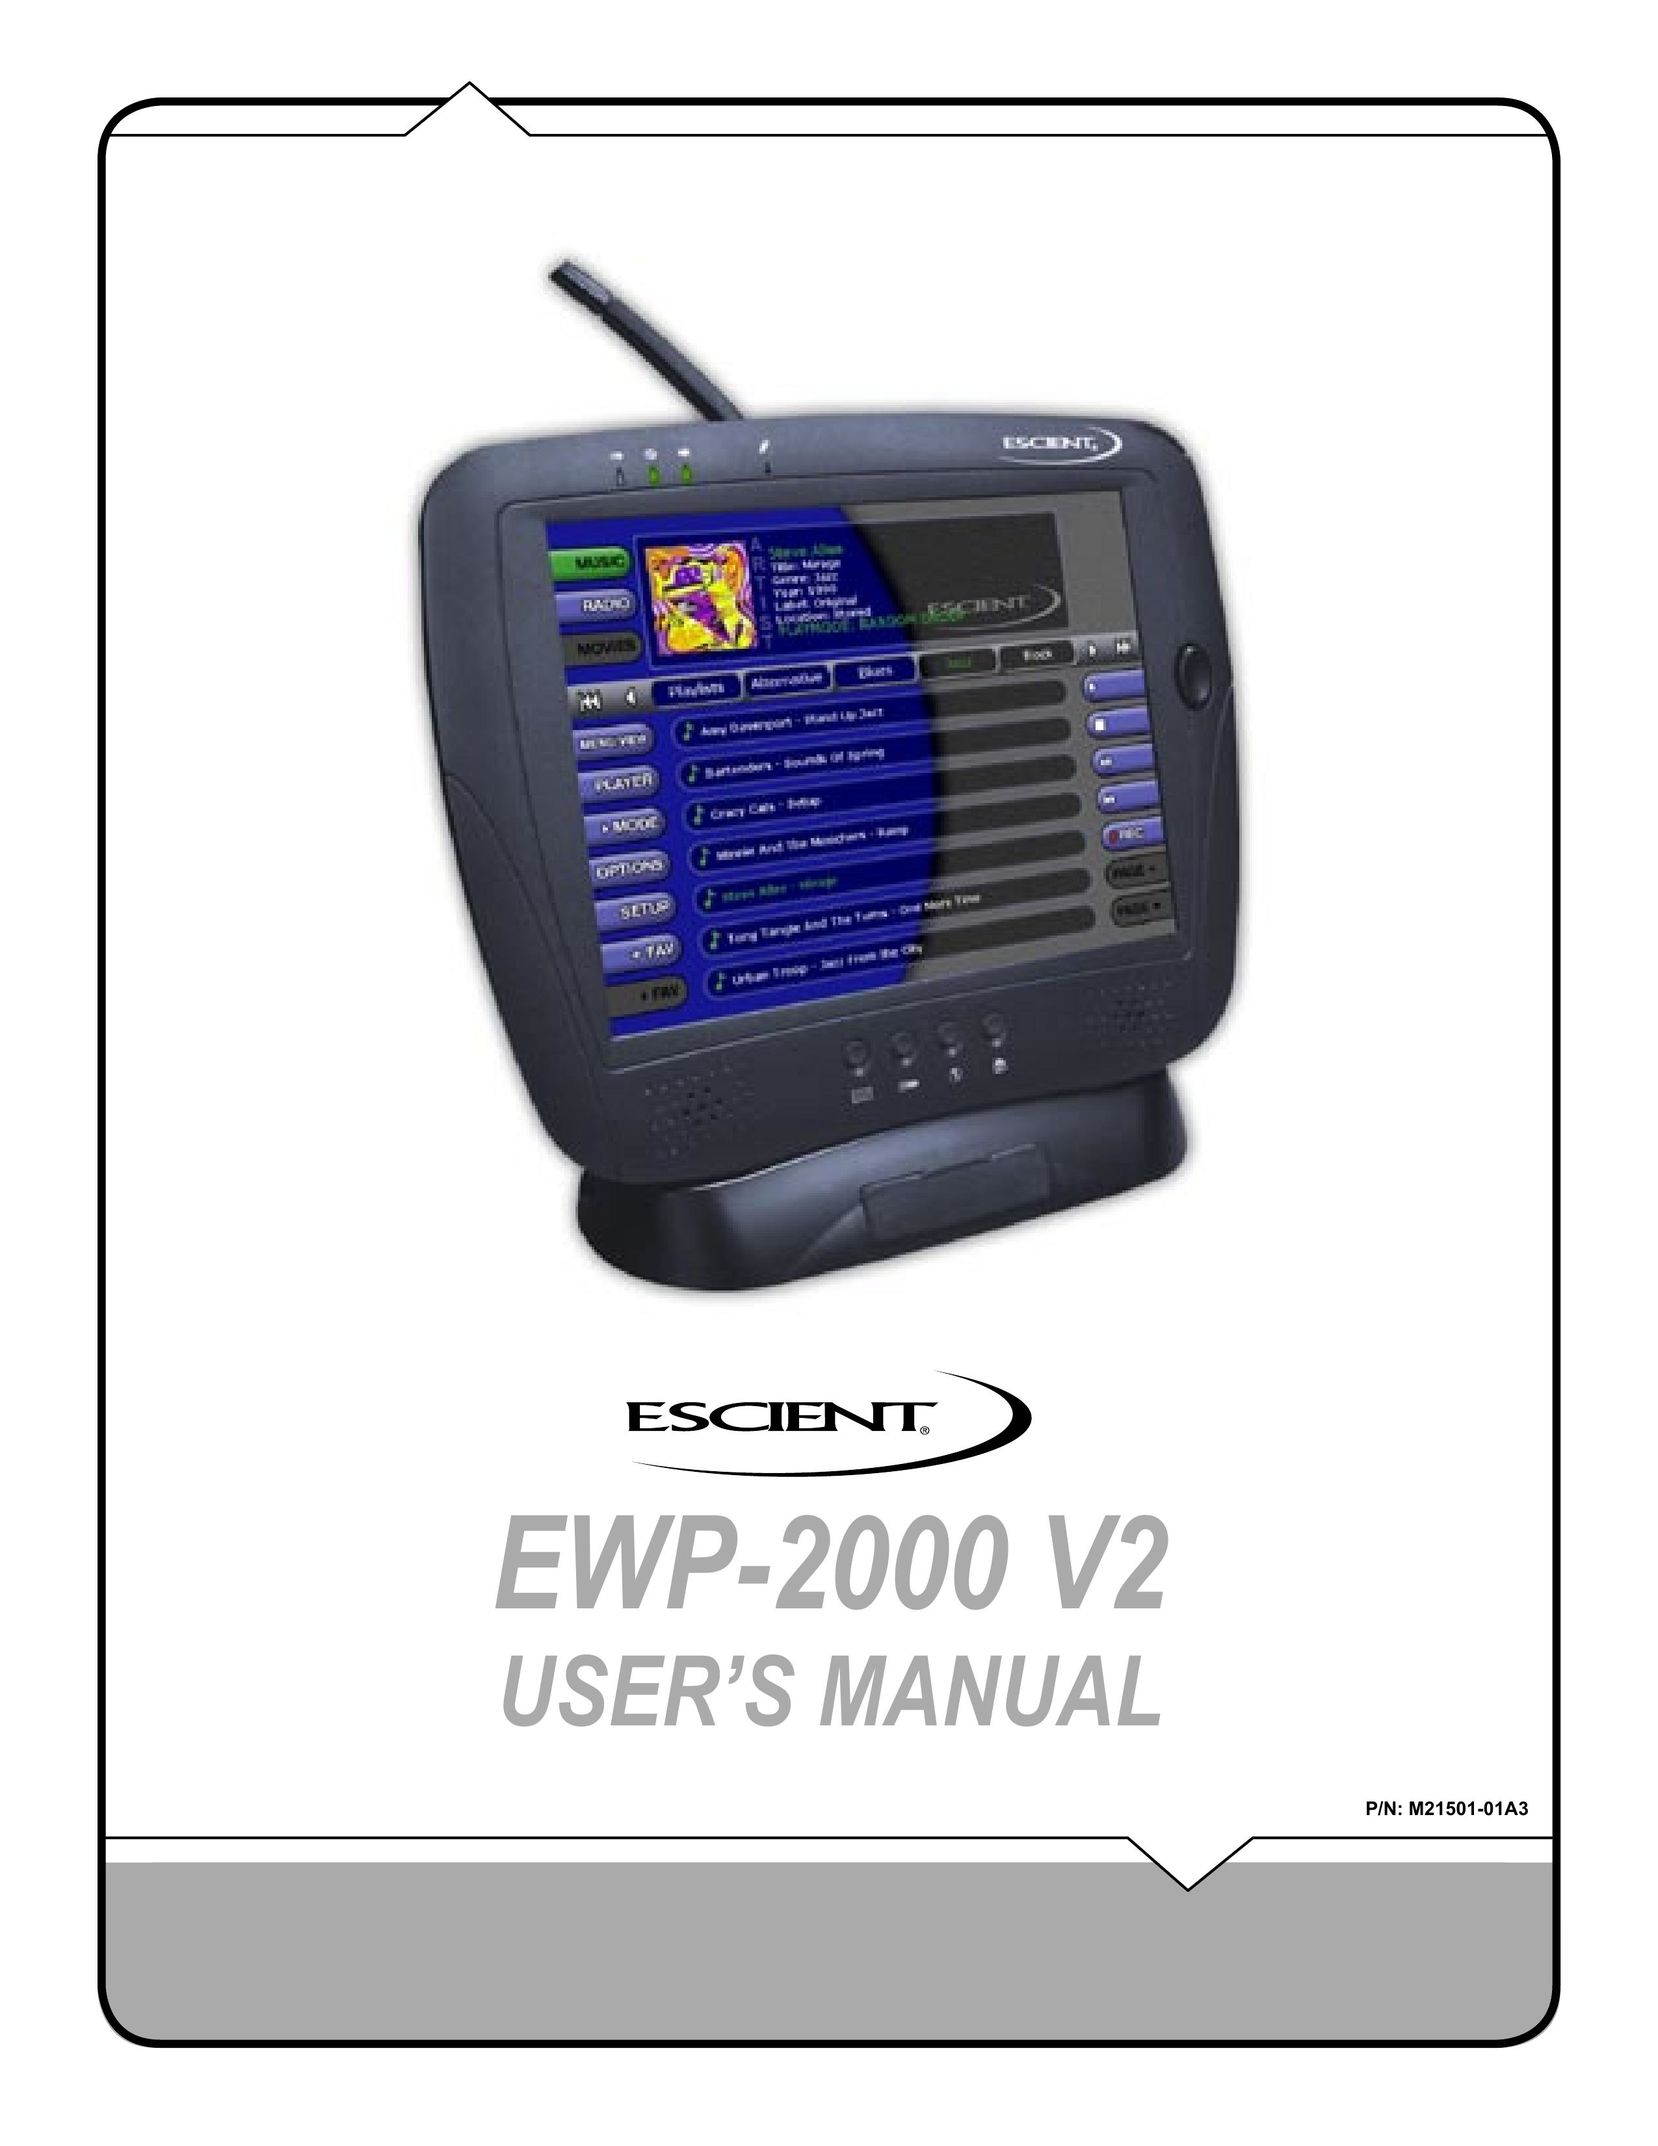 Escient EWP-2000 V2 Universal Remote User Manual